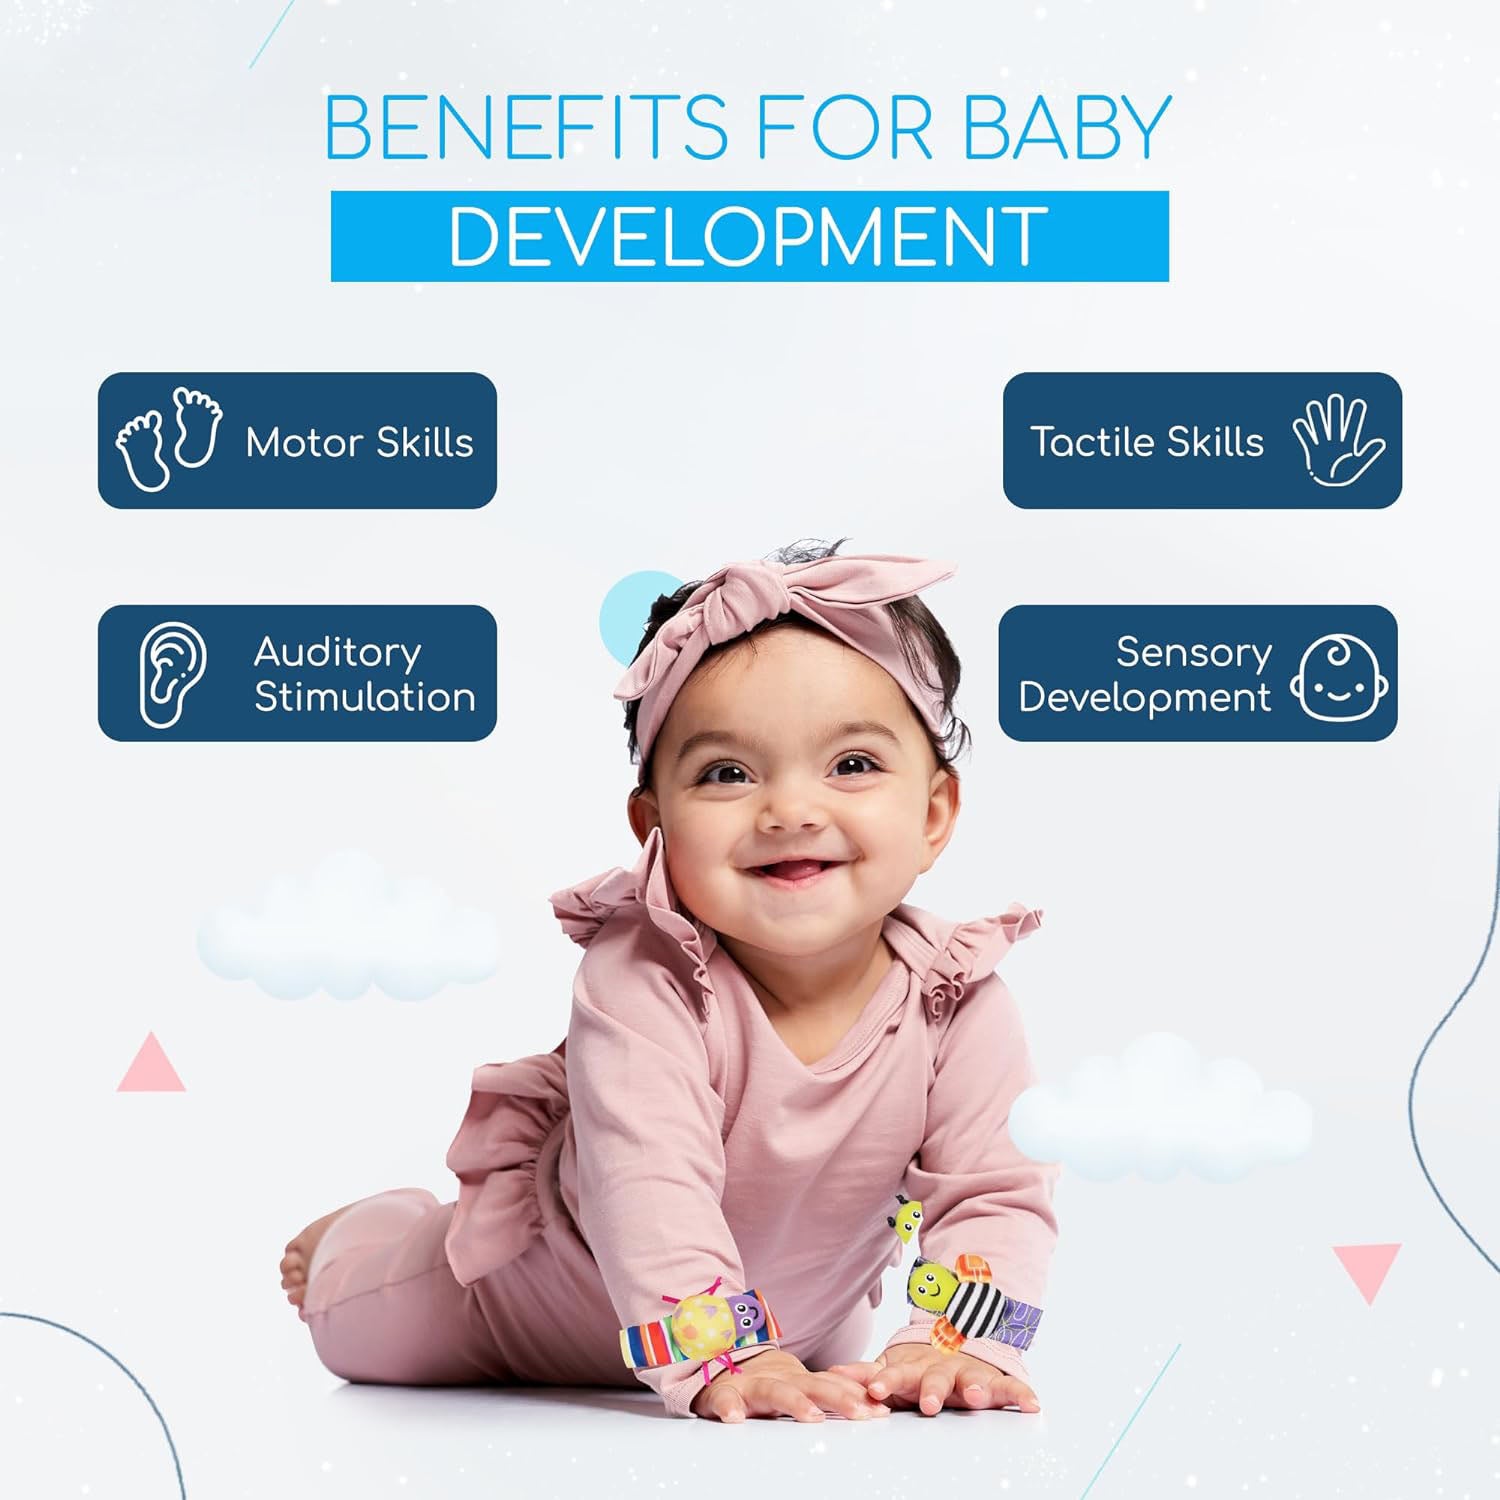 Benefits for baby development